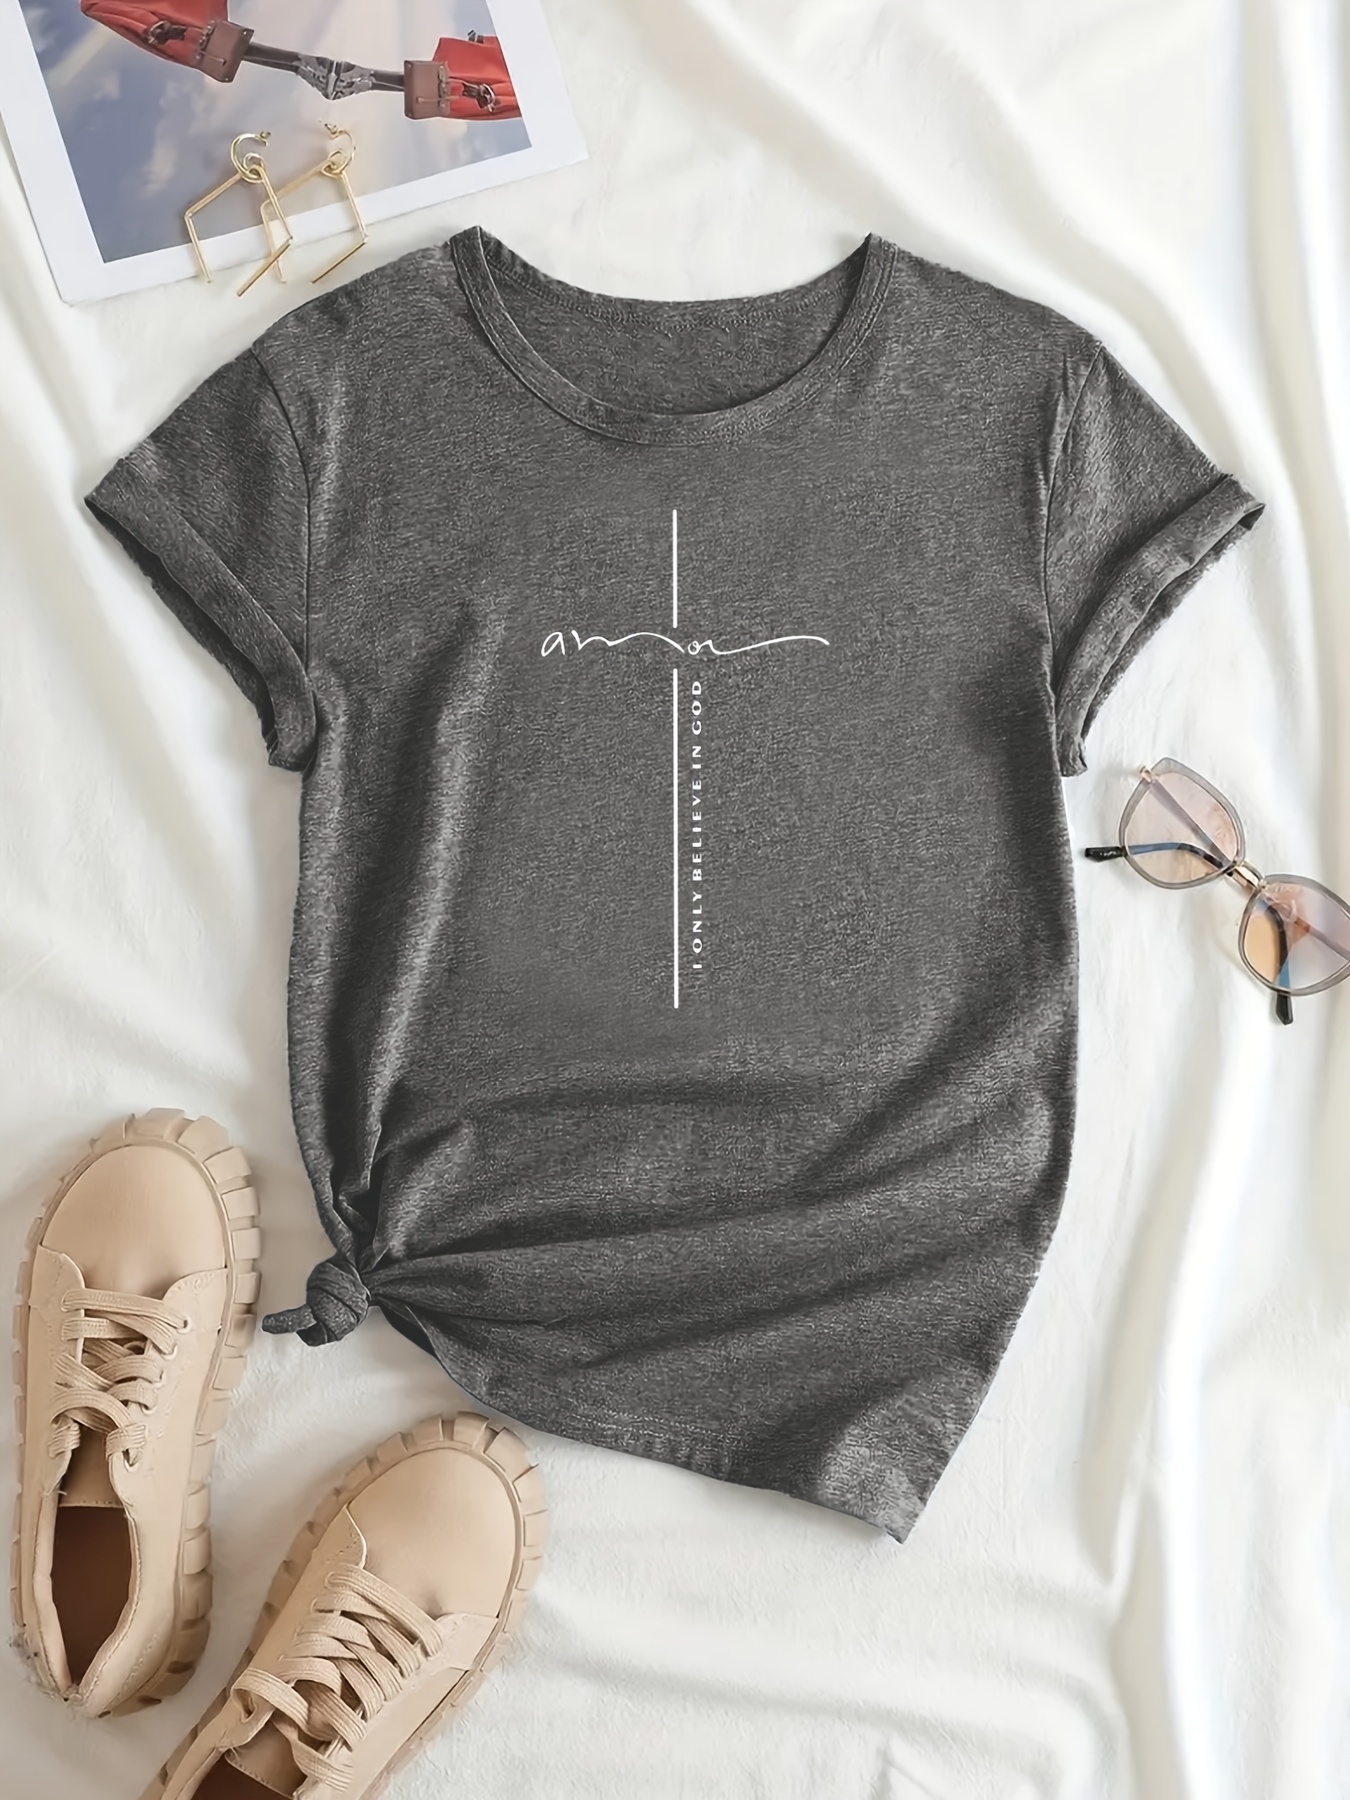 cross print christian t shirt casual short sleeve t shirt for spring summer womens clothing